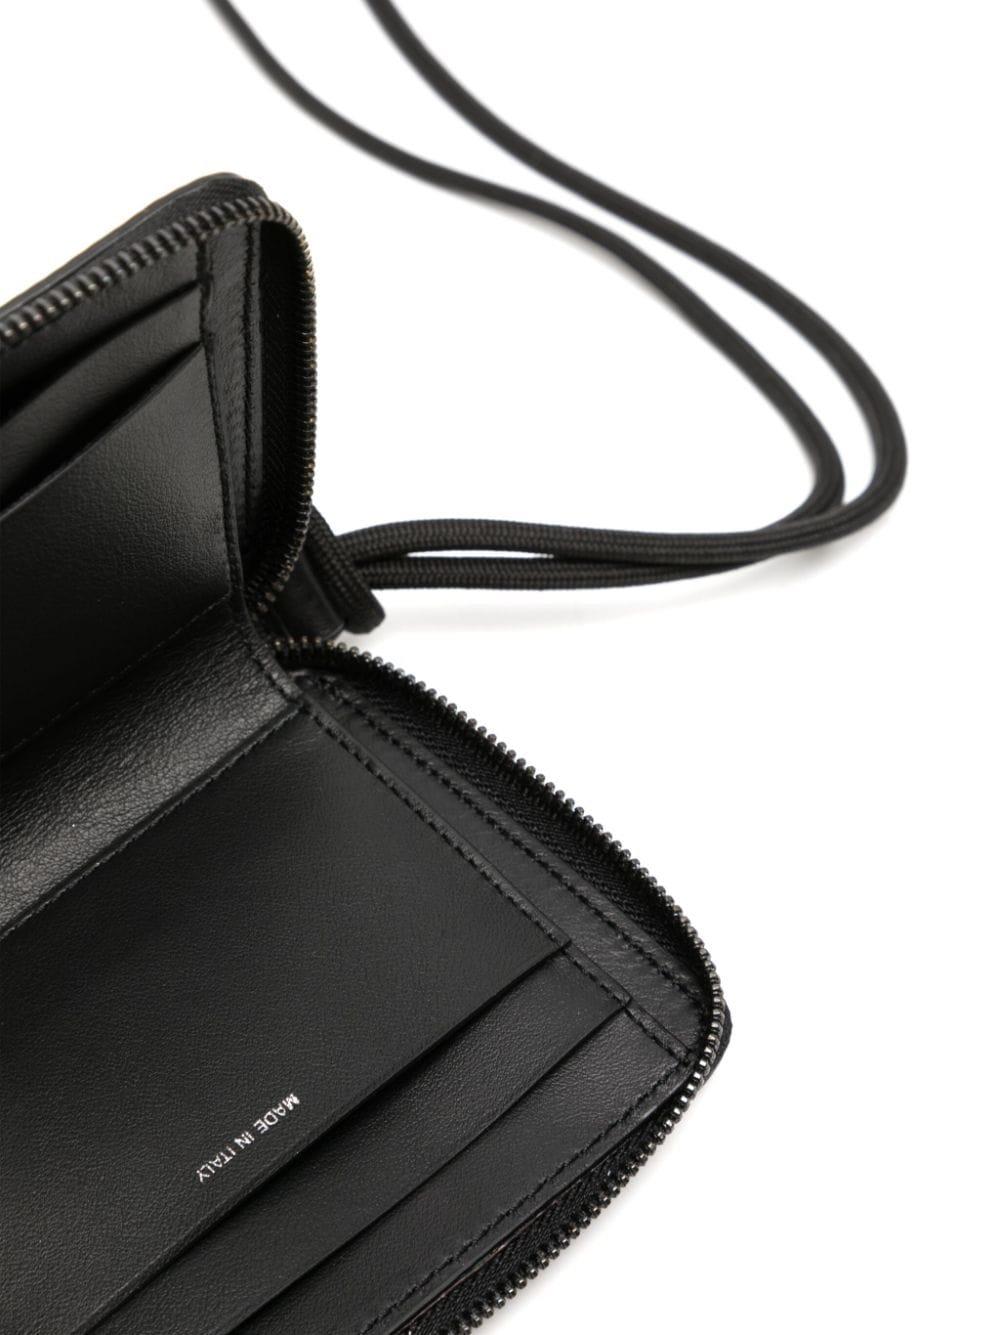 Paul Smith Shadow Stripe zipped leather wallet - Black